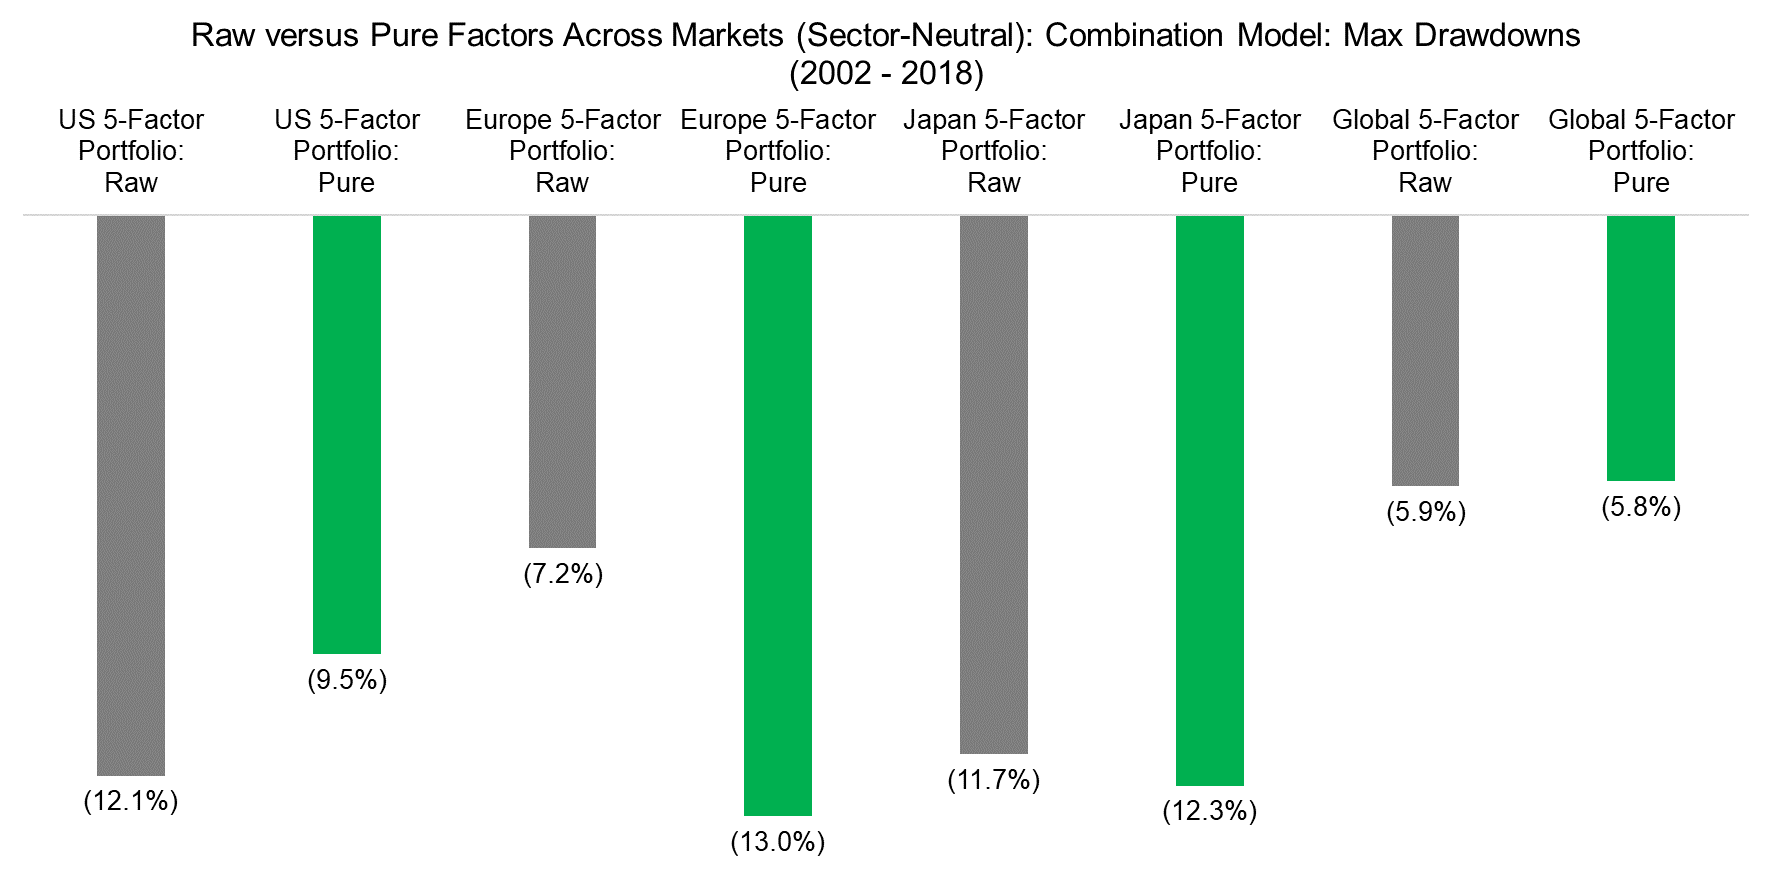 Raw versus Pure Factors Across Markets (Sector-Neutral) Combination Model Max Drawdowns (2002 - 2018)